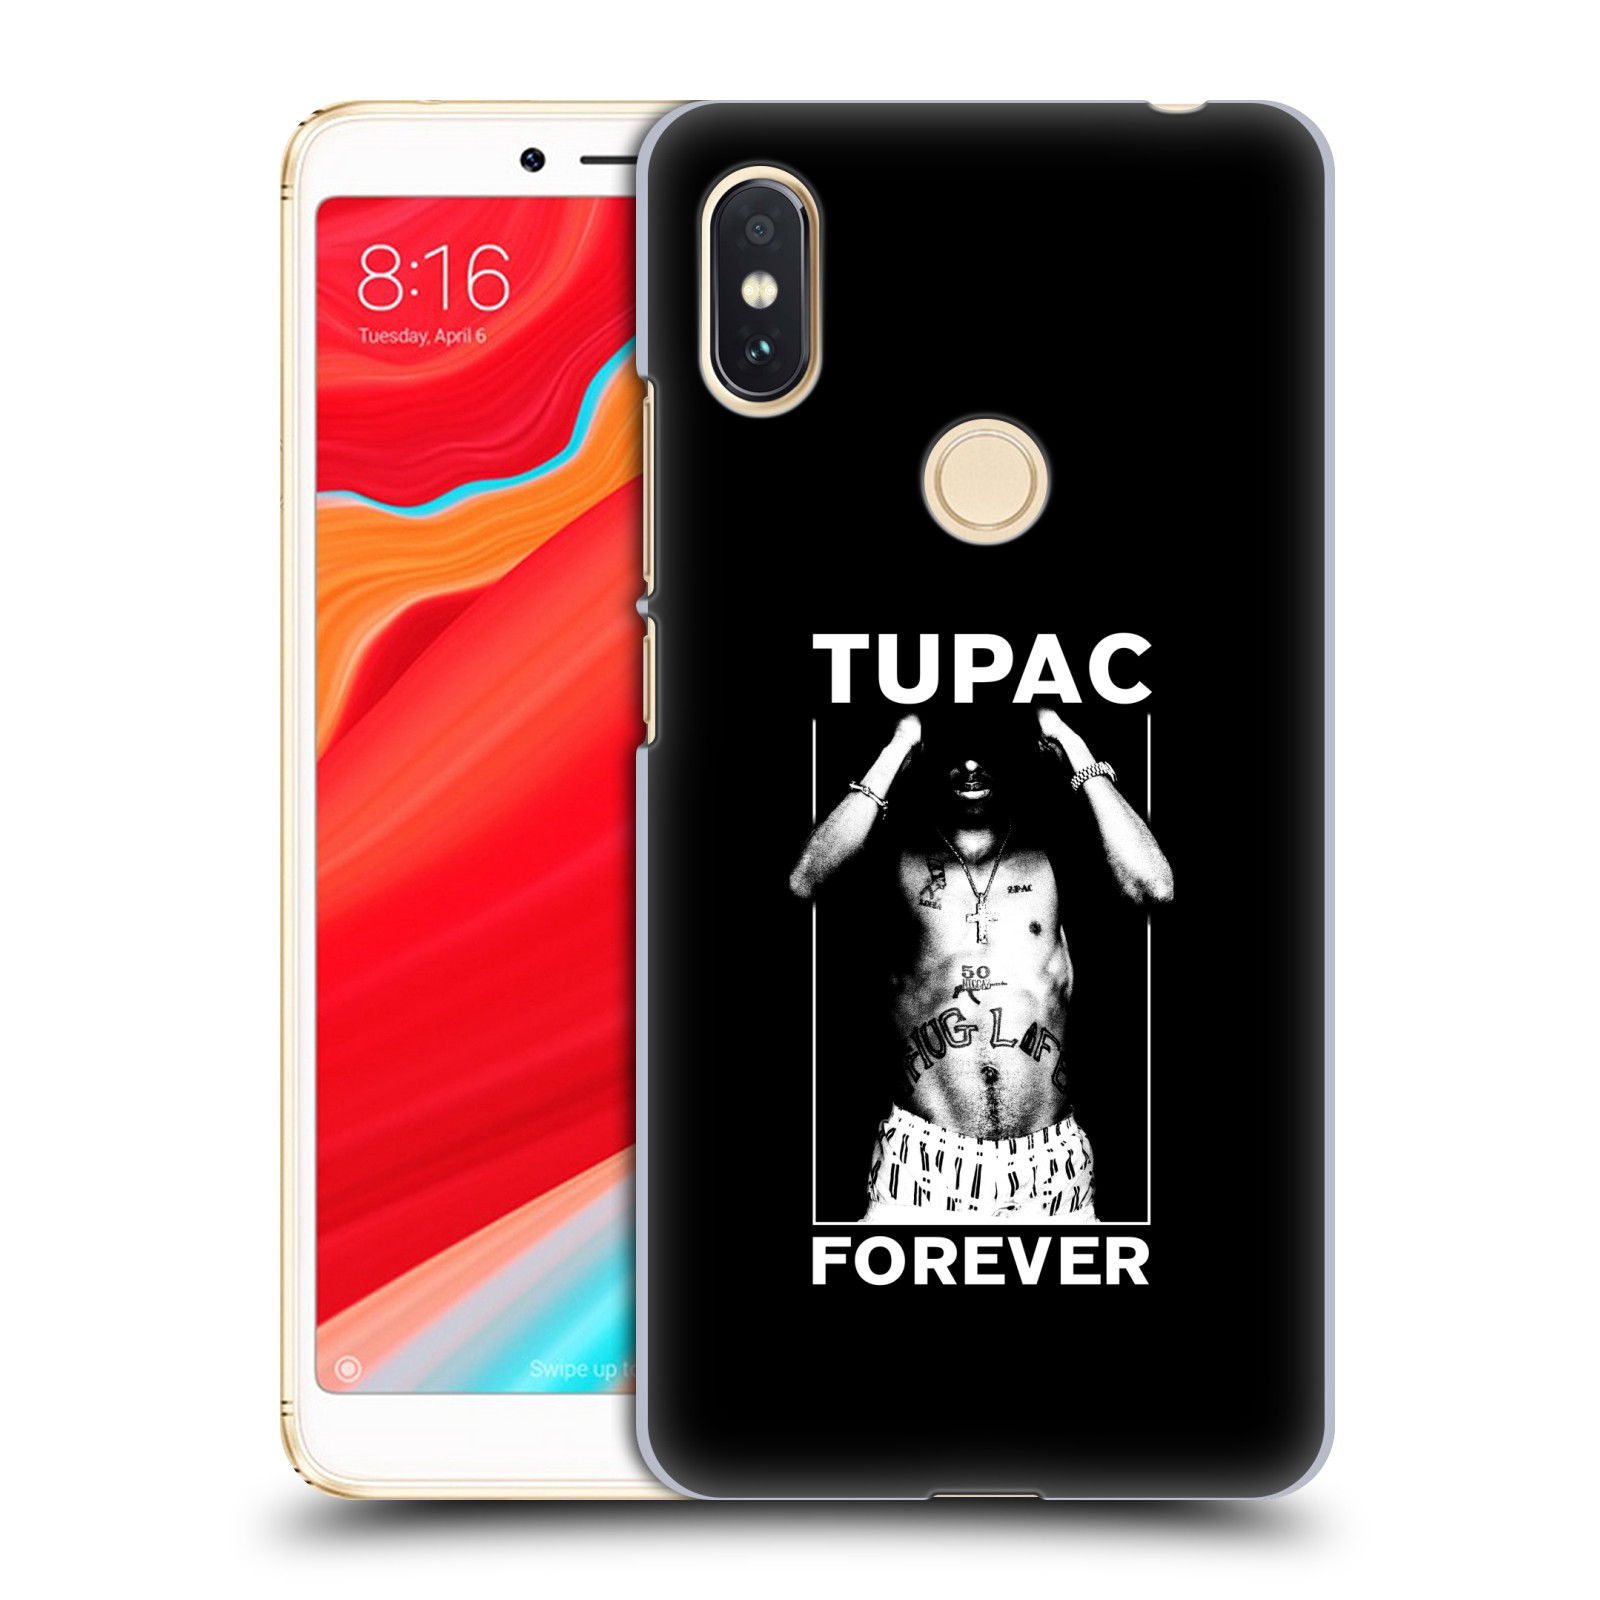 HEAD CASE plastový obal na mobil Xiaomi Redmi S2 Zpěvák rapper Tupac Shakur 2Pac bílý popisek FOREVER